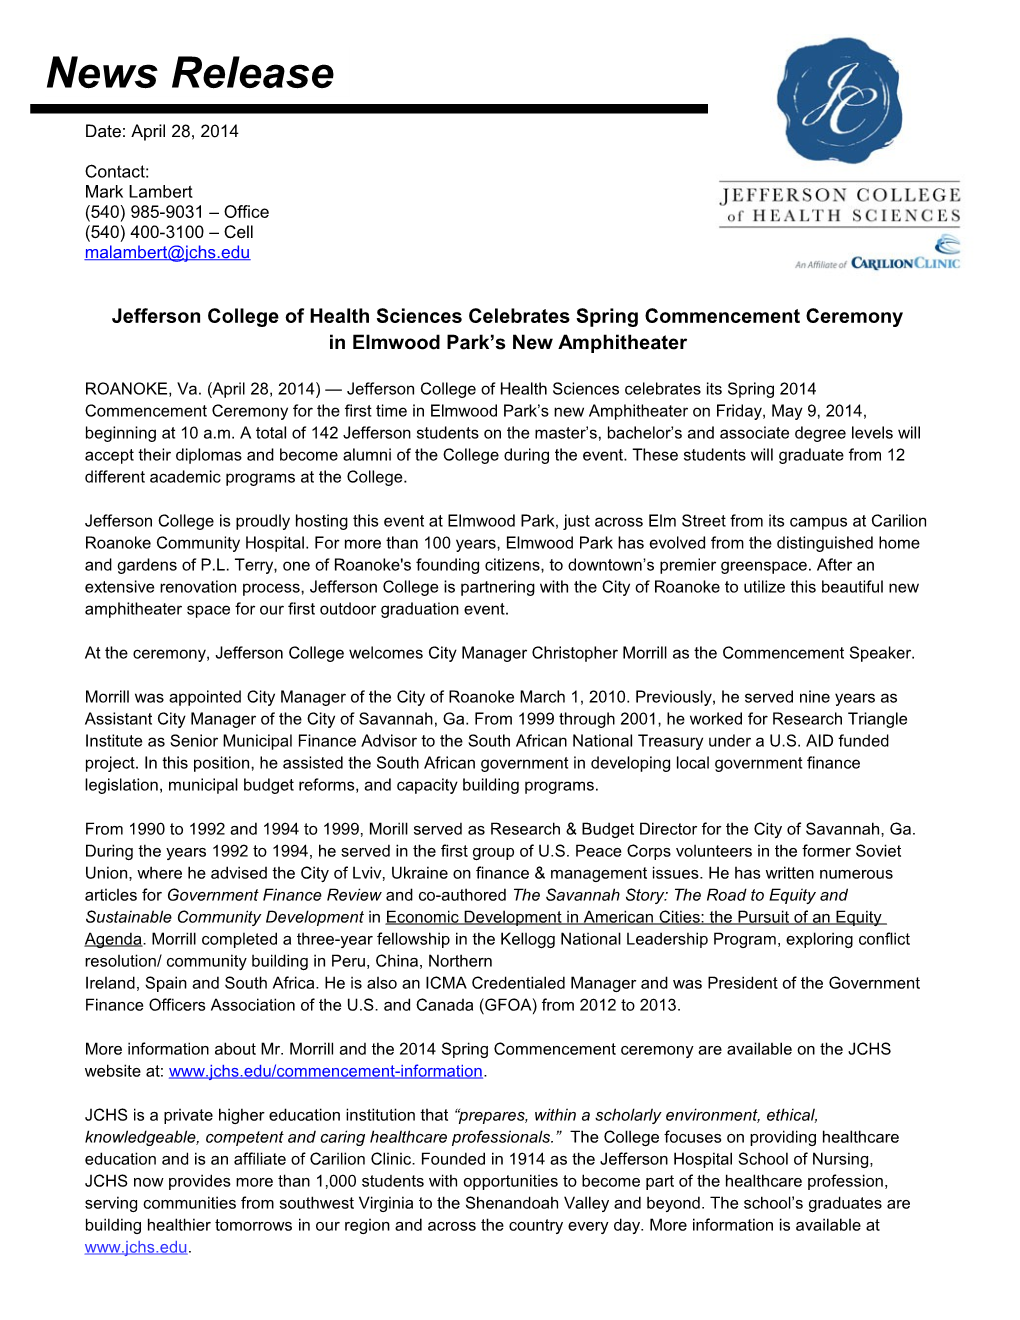 Jefferson College of Health Sciences Celebrates Spring Commencement Ceremony